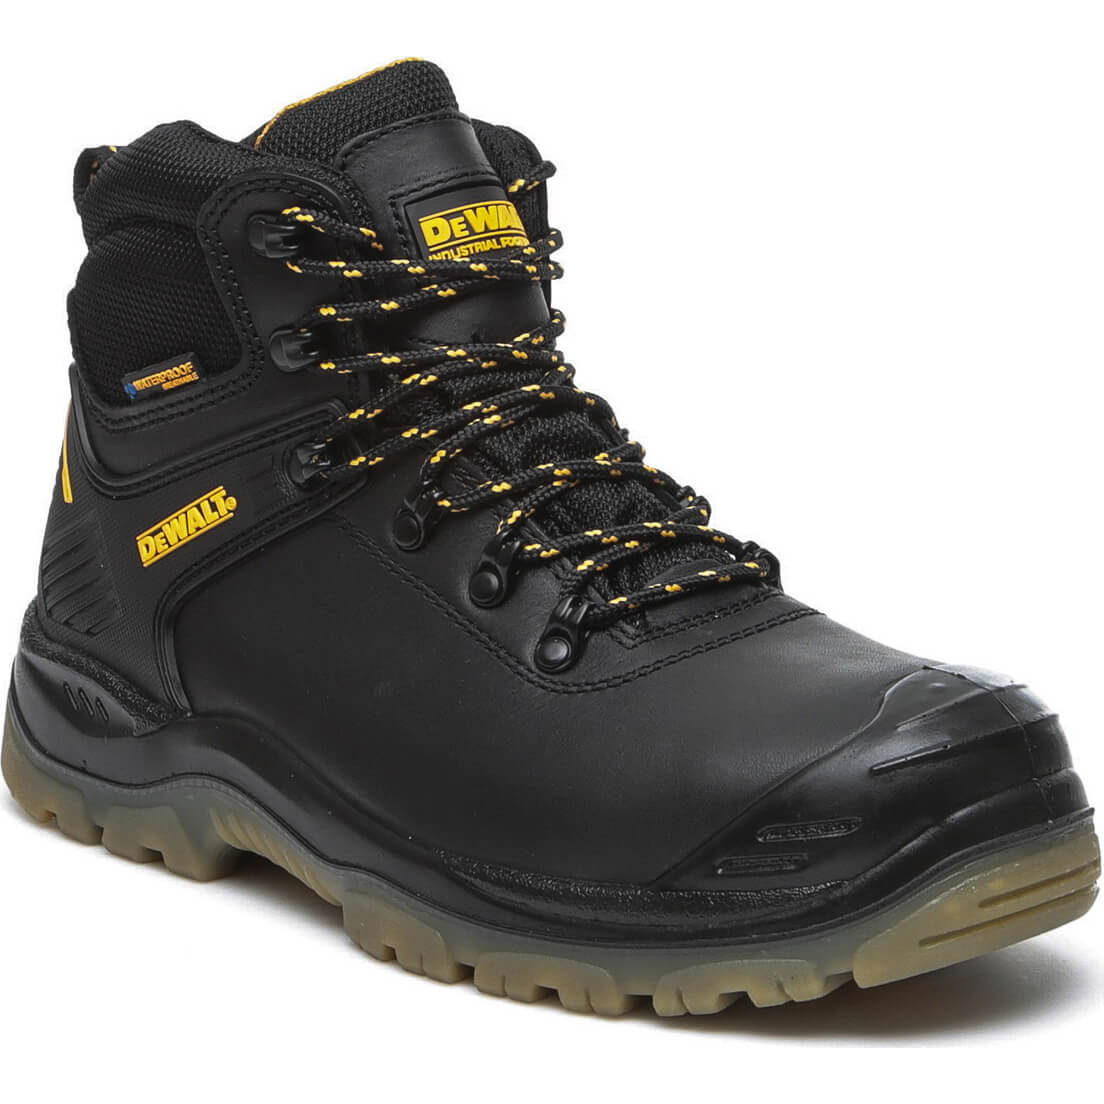 DeWalt Newark Waterproof Safety Hiker Boots Black Size 9